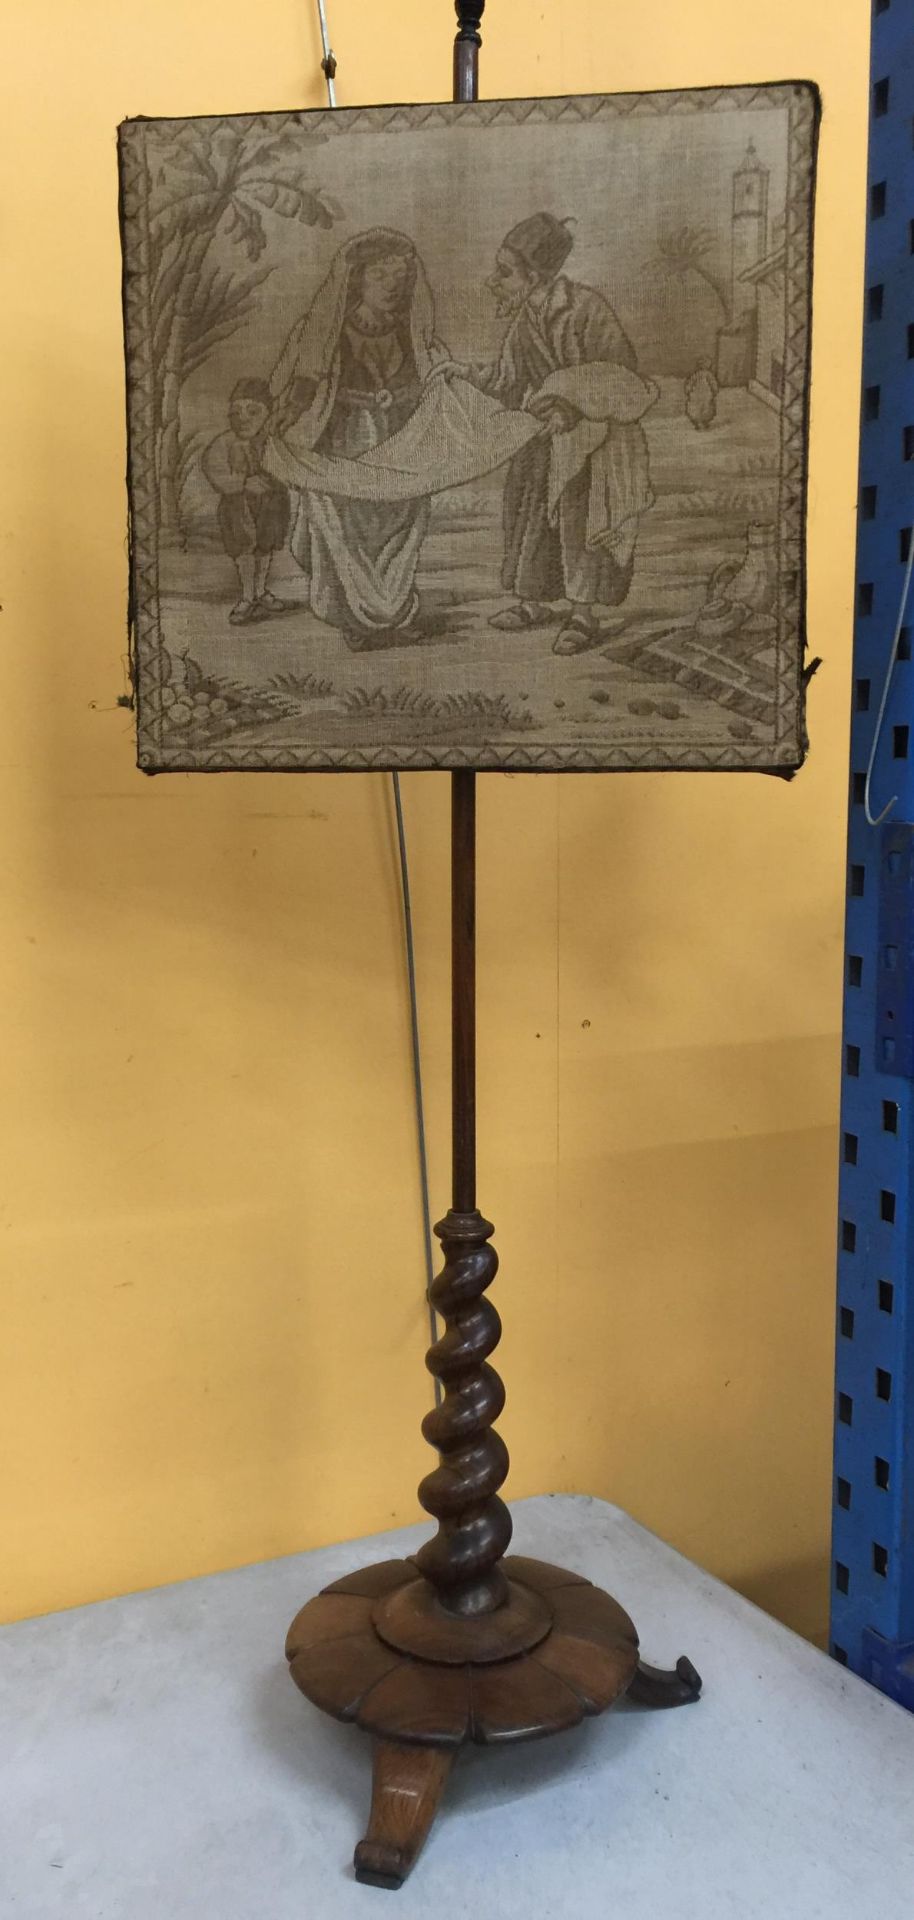 A VICTORIAN MAHOGANY NEEDLEWORK STAND WITH BARLEY TWIST COLUMN